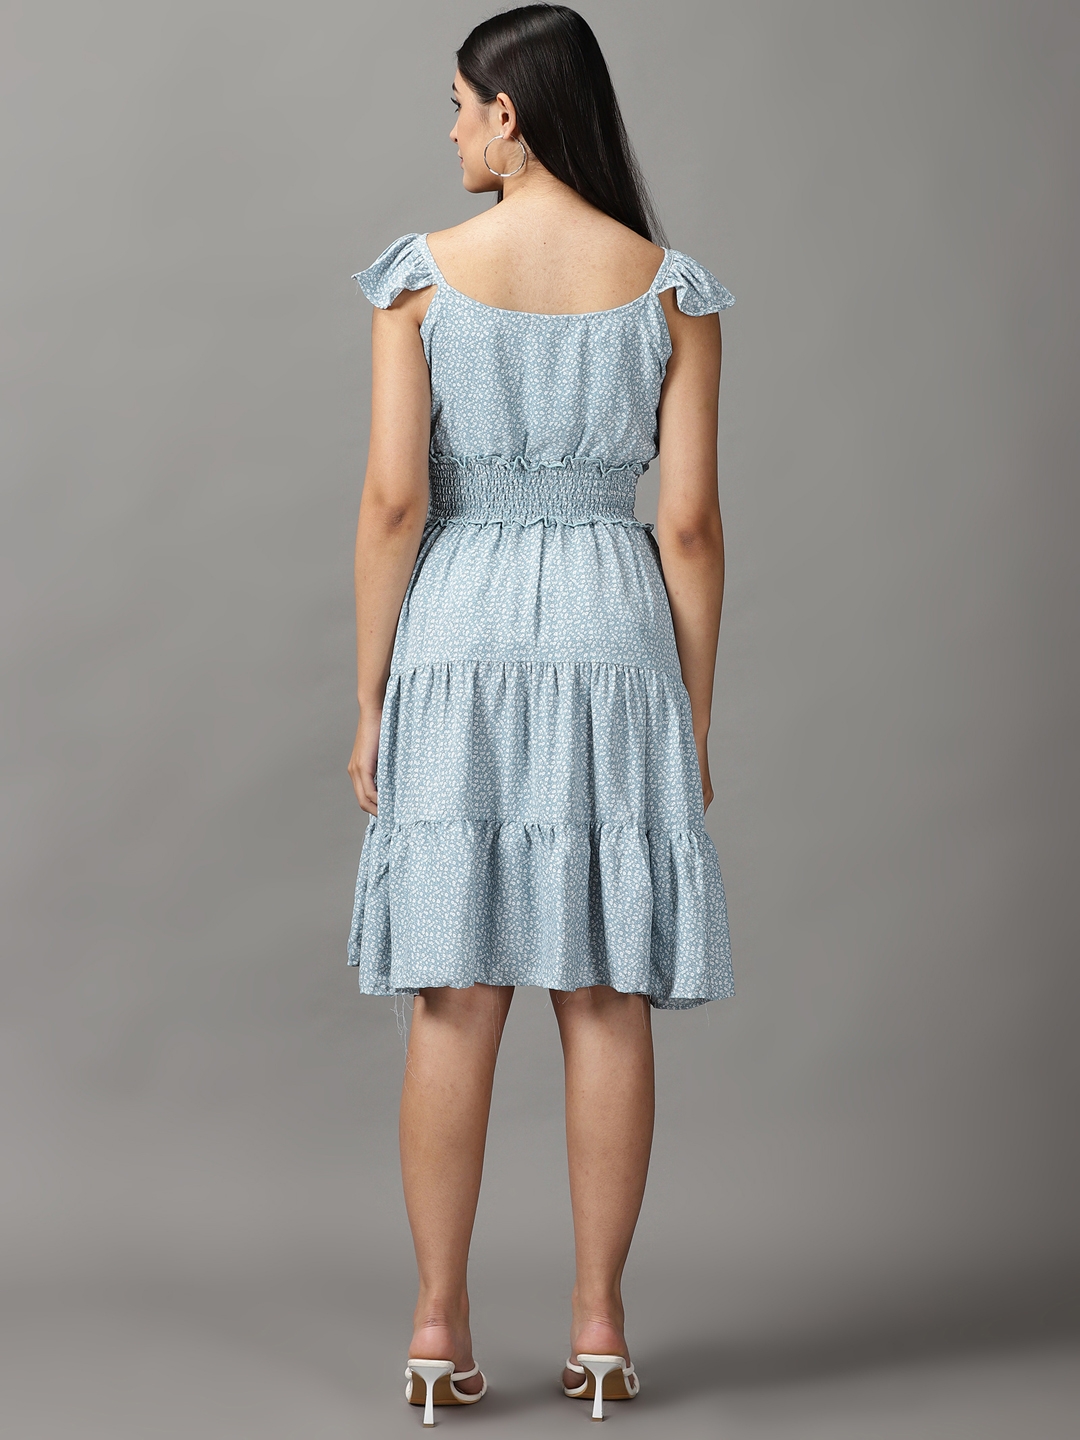 Showoff | SHOWOFF Women Blue Printed Shoulder Straps Sleeveless Above Knee Fit and Flare Dress 3